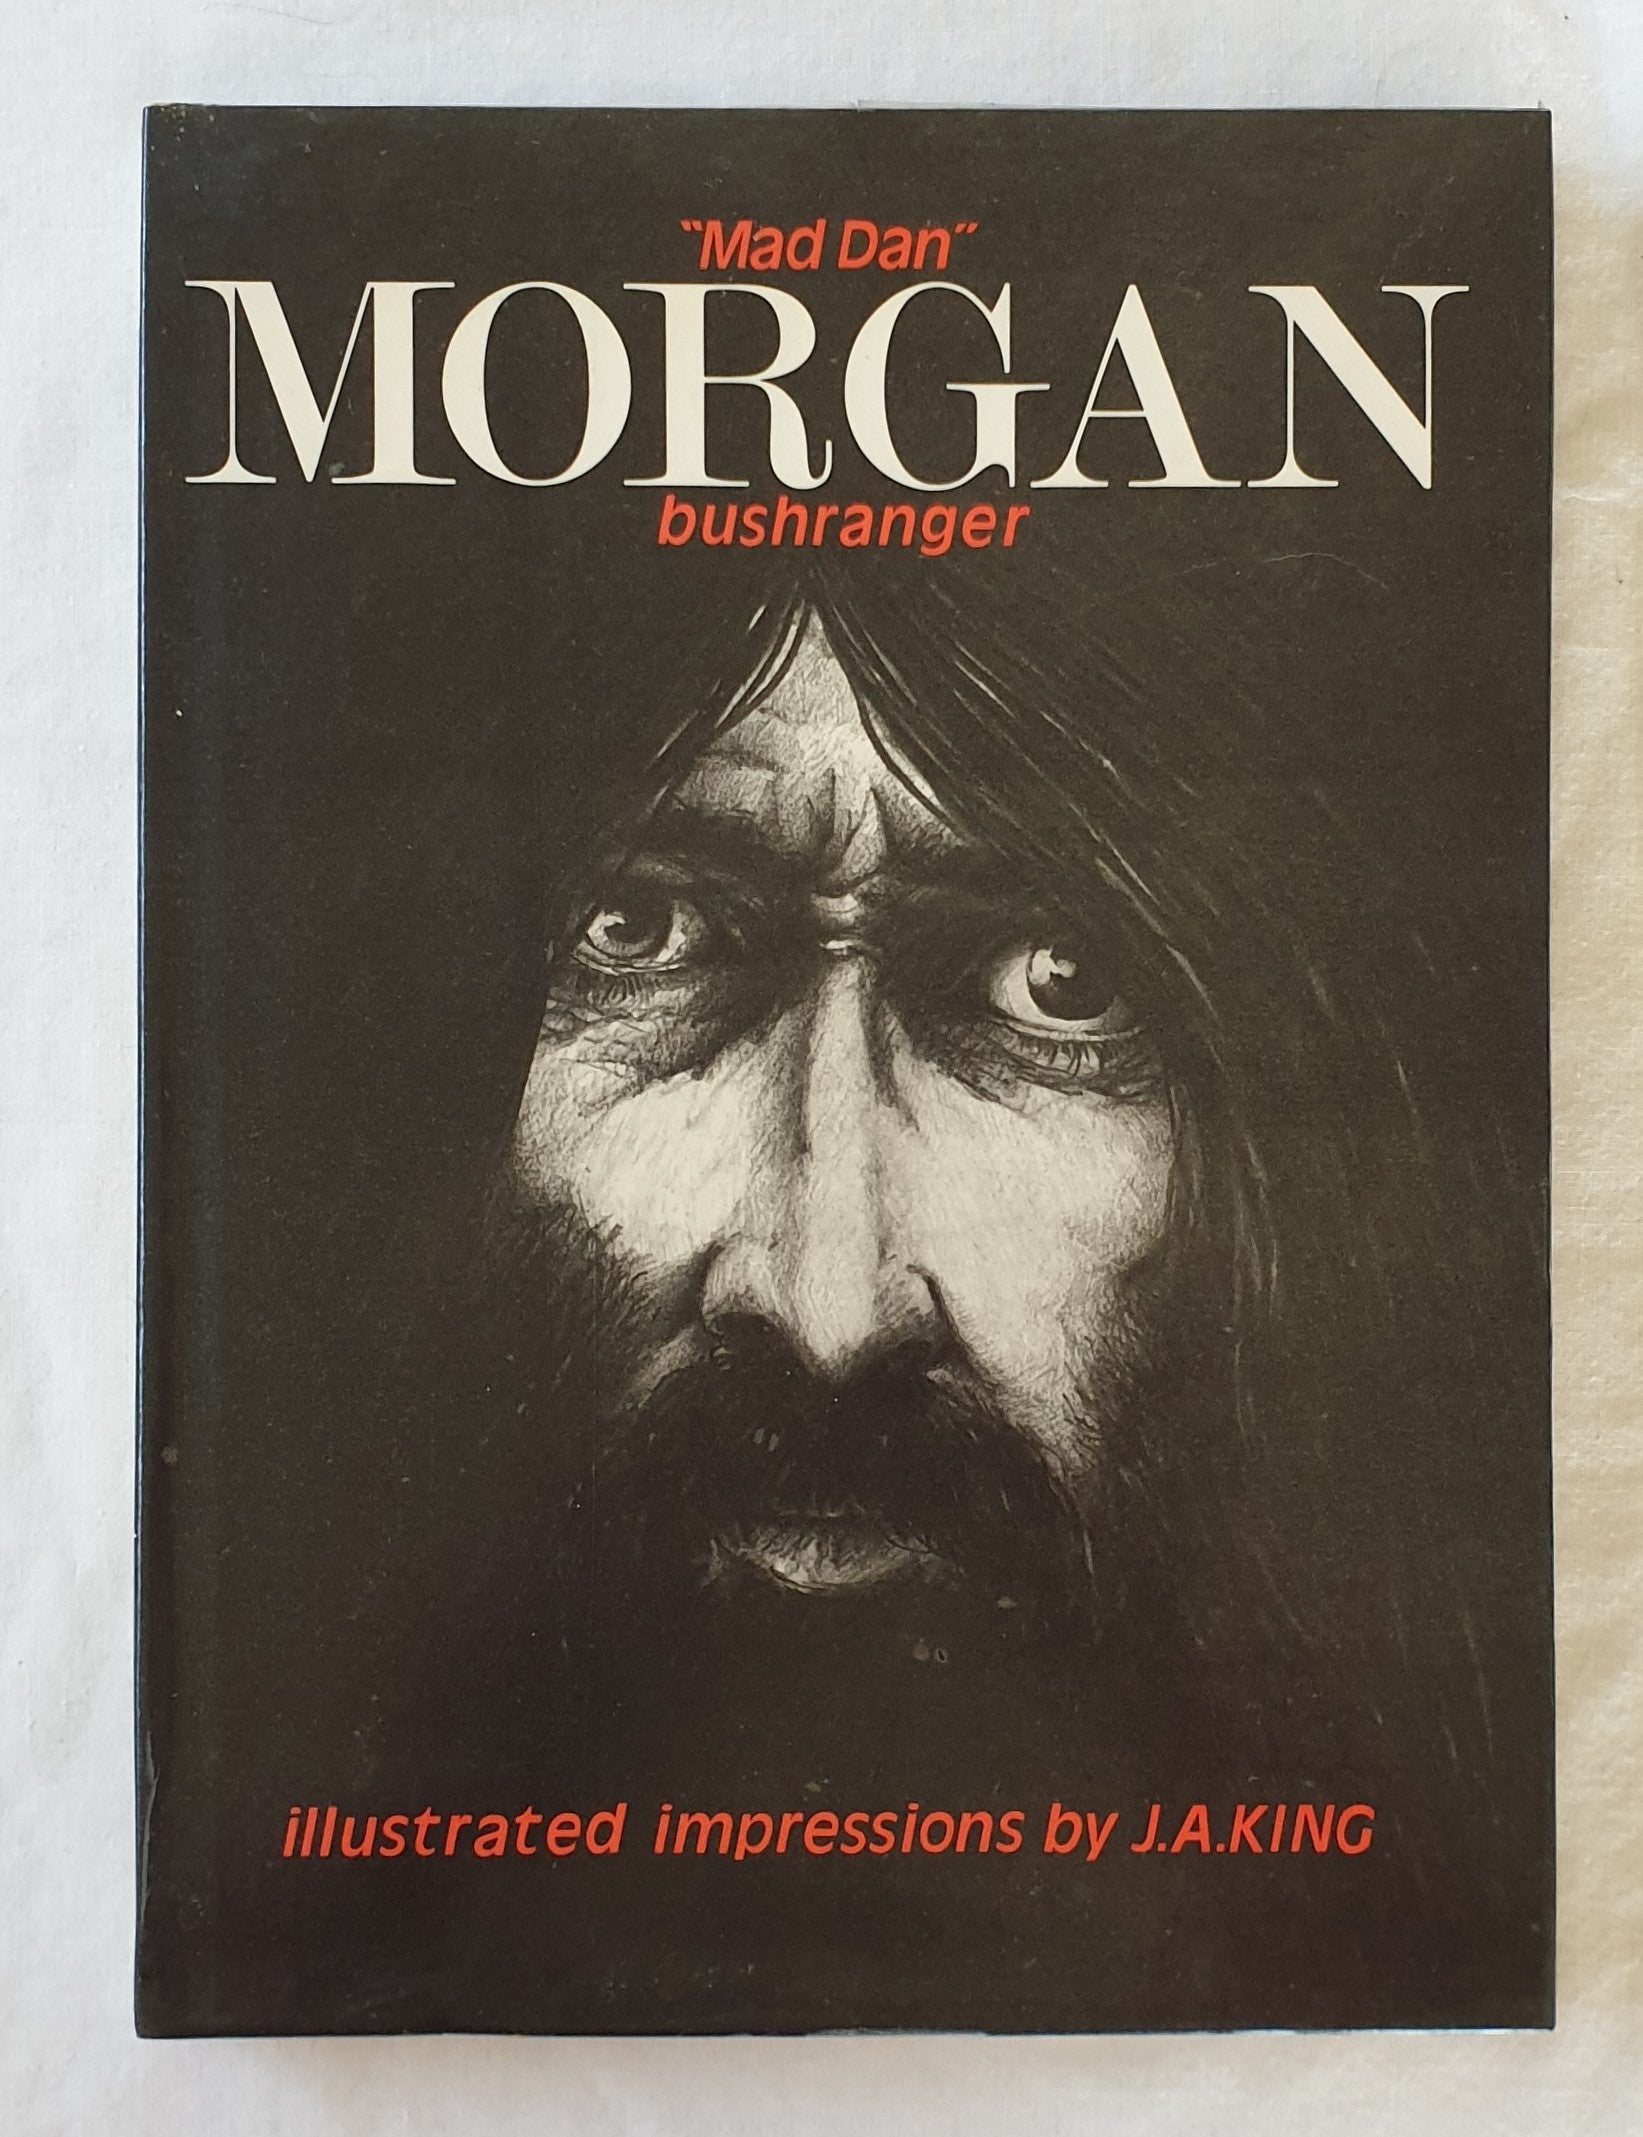 “Mad Dan” Morgan Bushranger by J. A. King